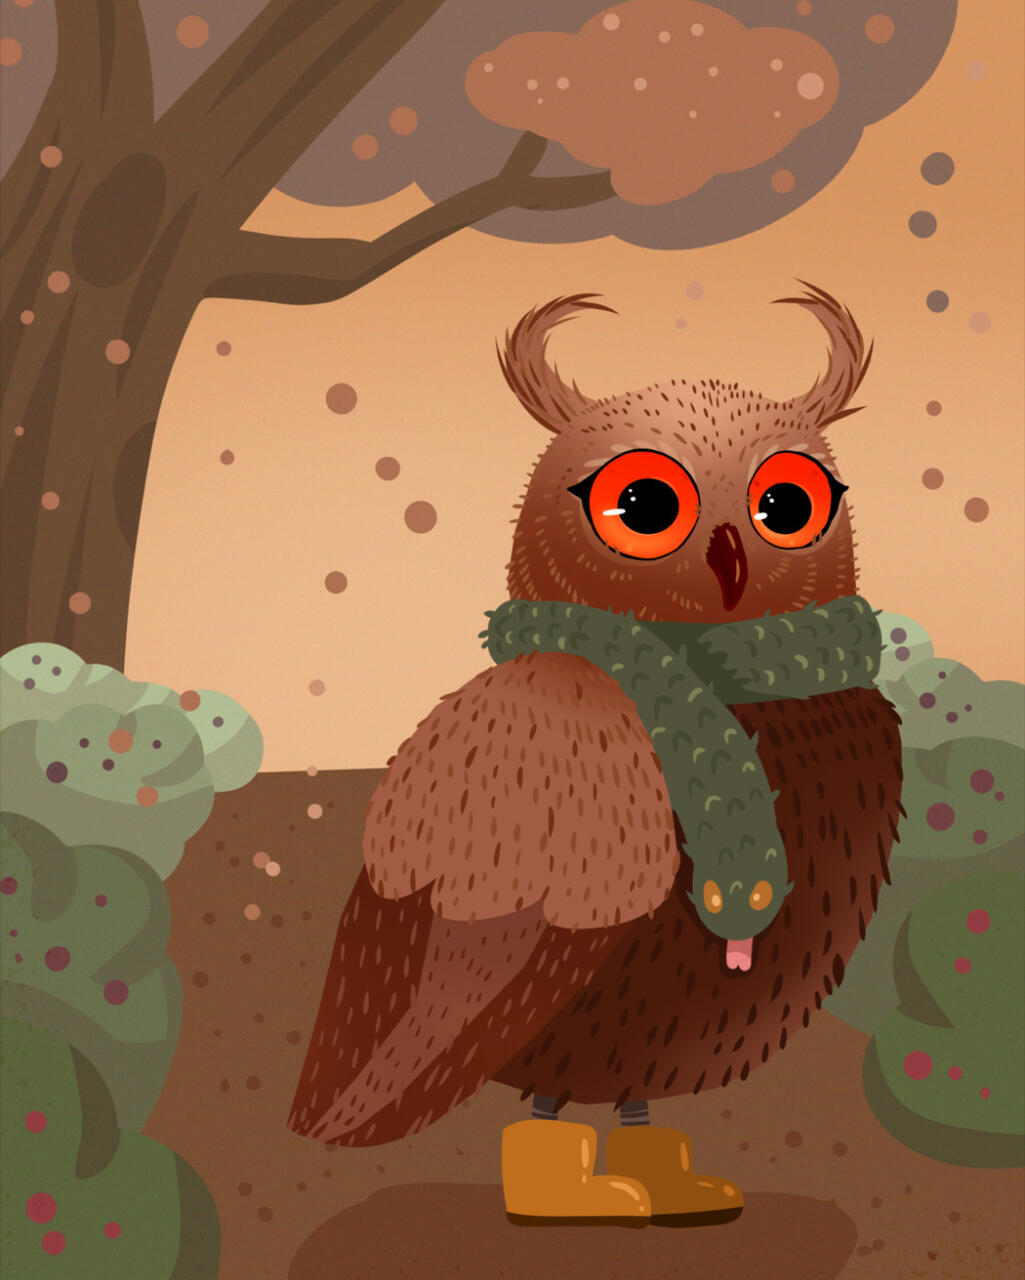 Illustration of an owl